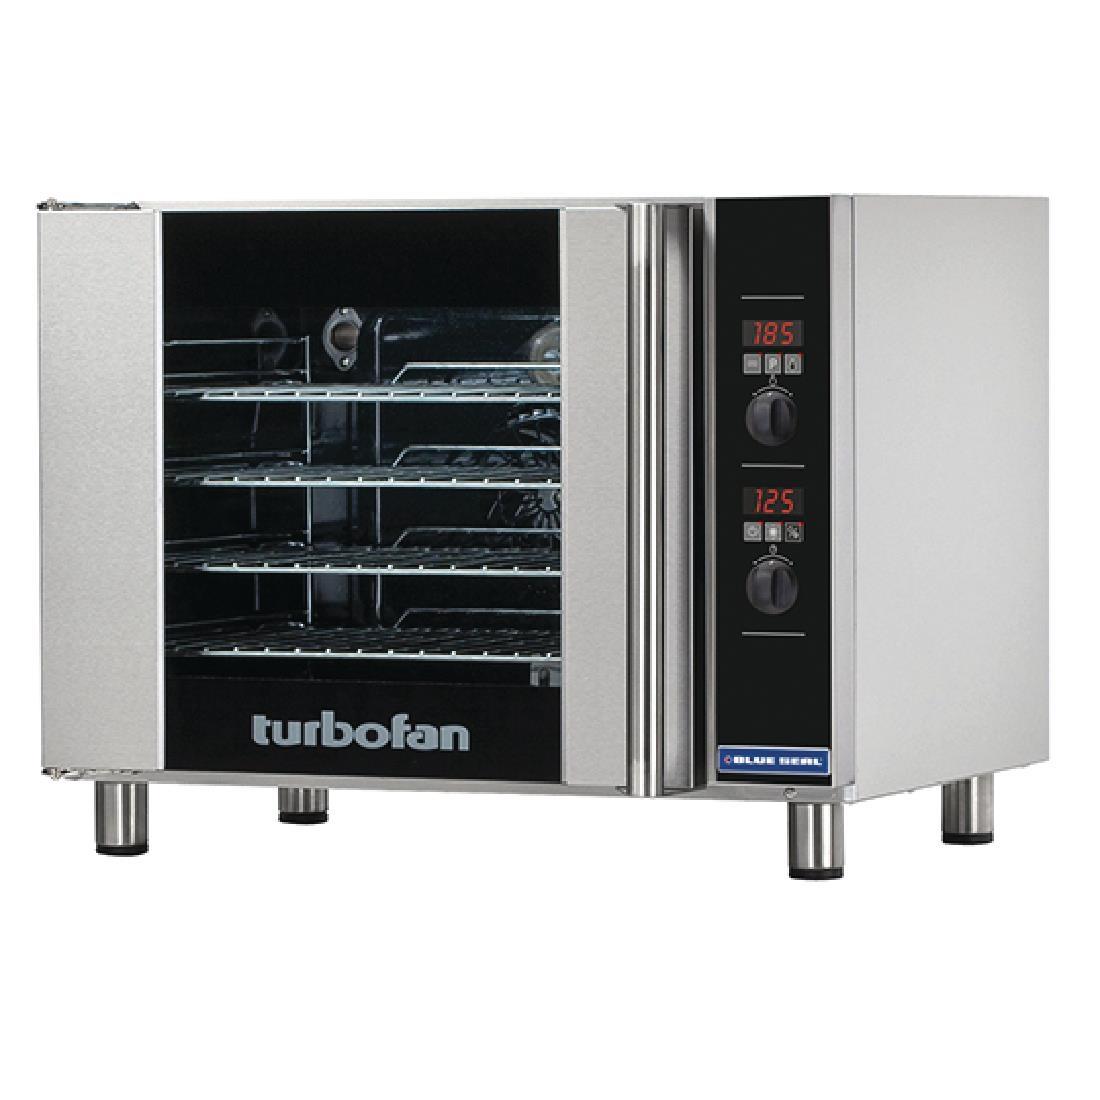 Blue Seal Turbofan Convection Oven E31D4 - CE088  - 1